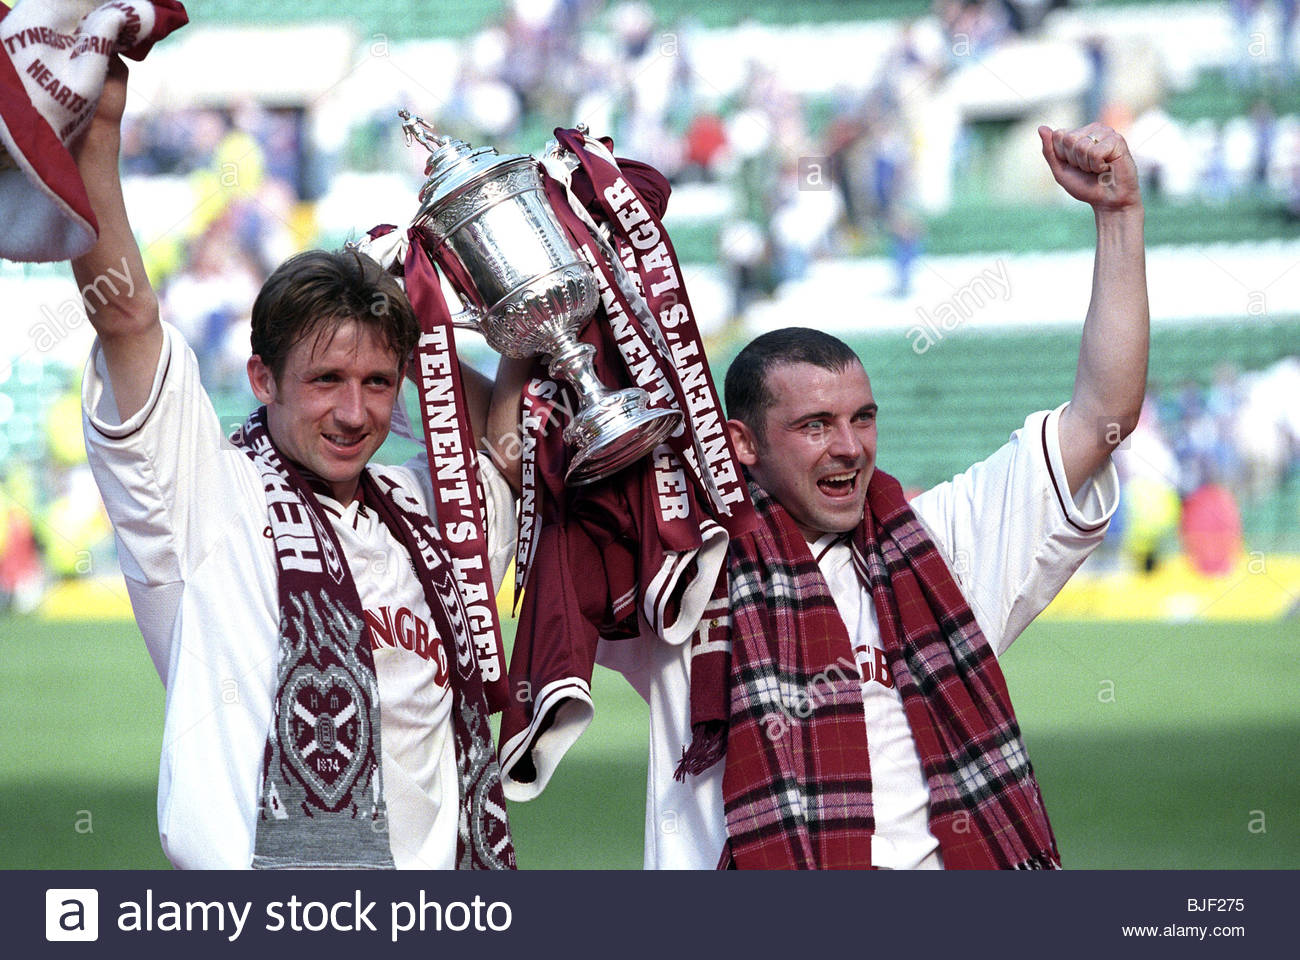 Image result for heart of midlothian fans parkhead 1998